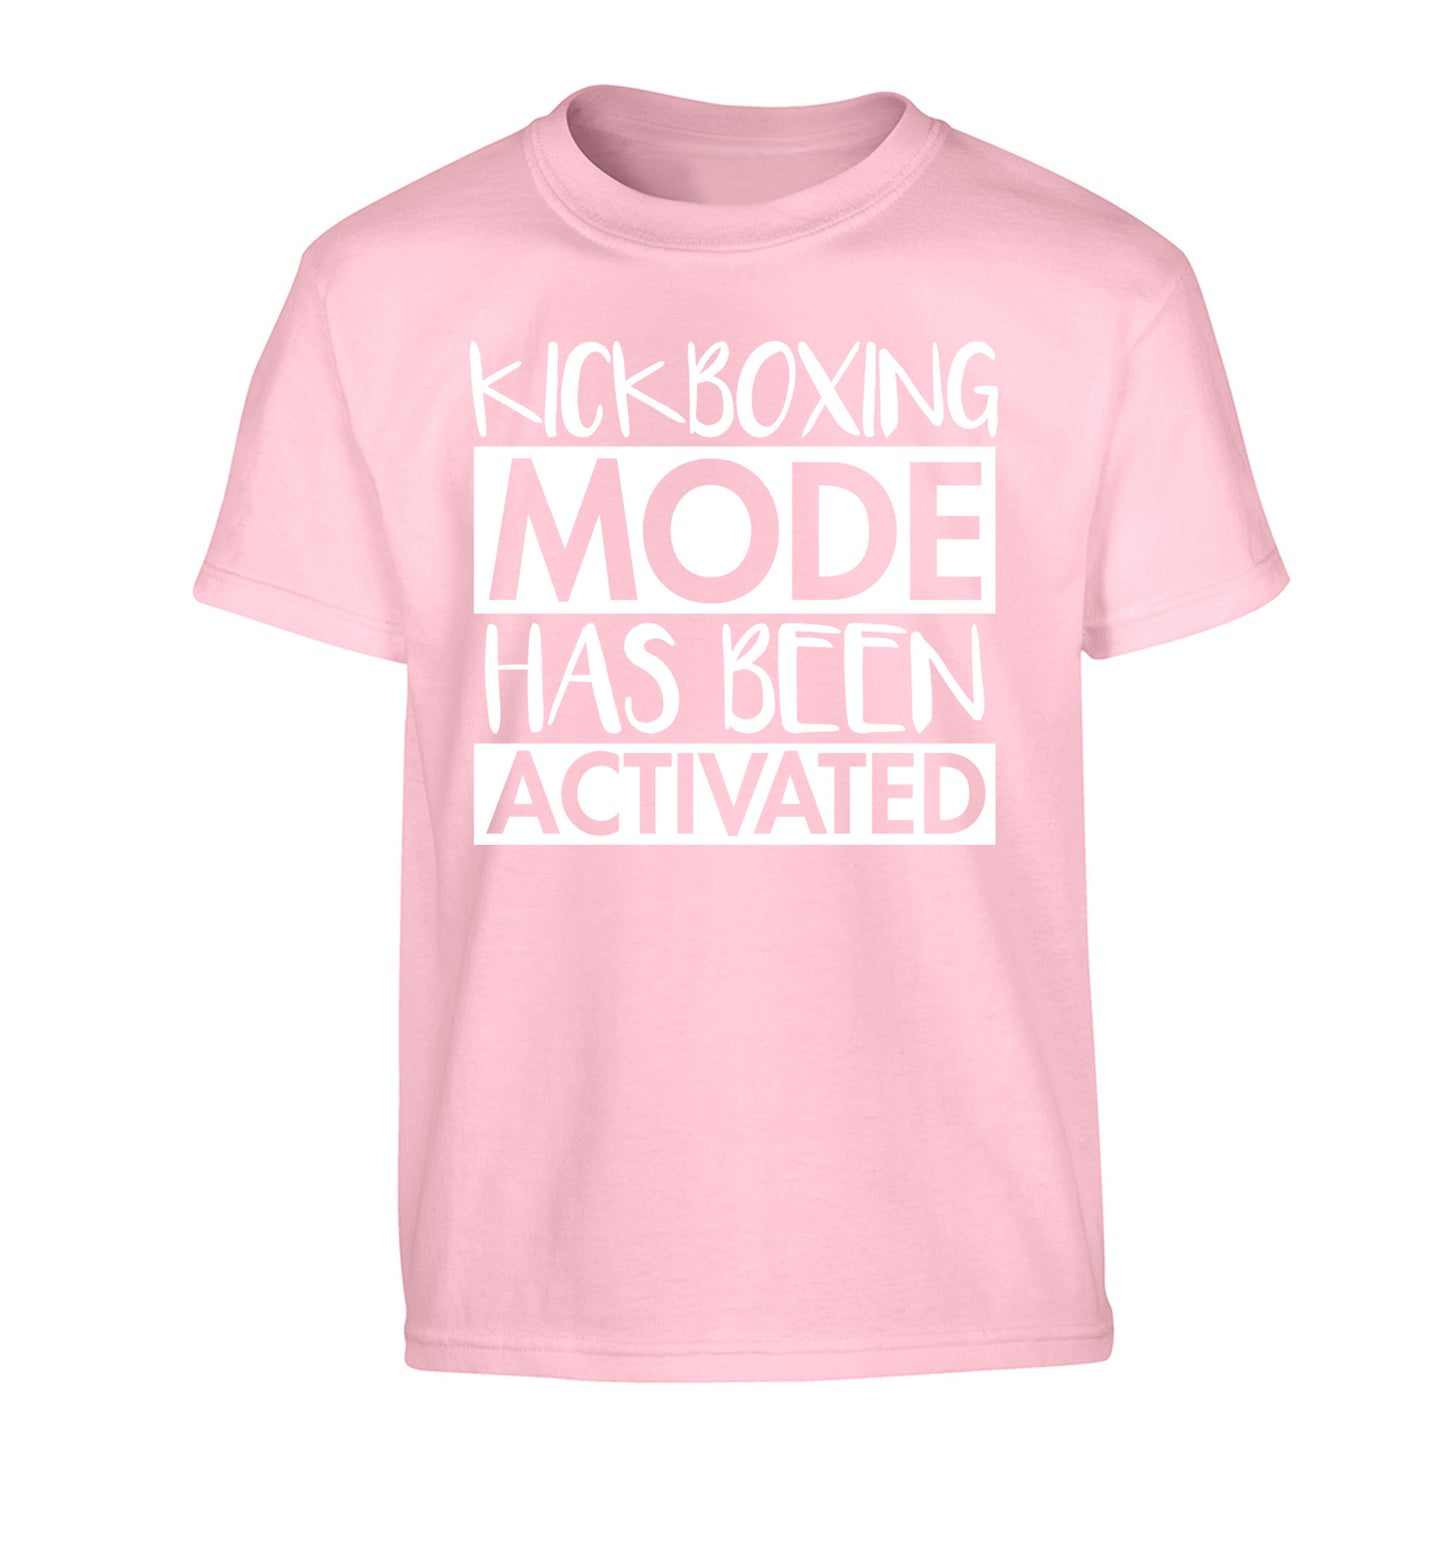 Kickboxing mode activated Children's light pink Tshirt 12-14 Years